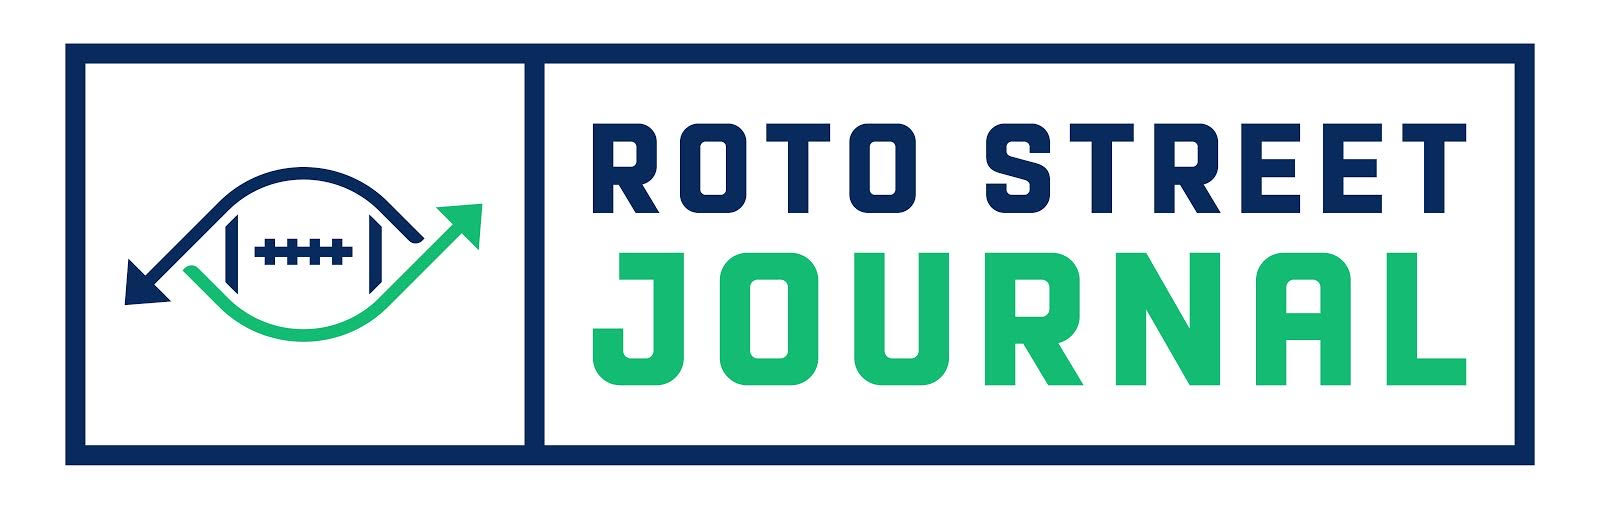 Roto Street Journal